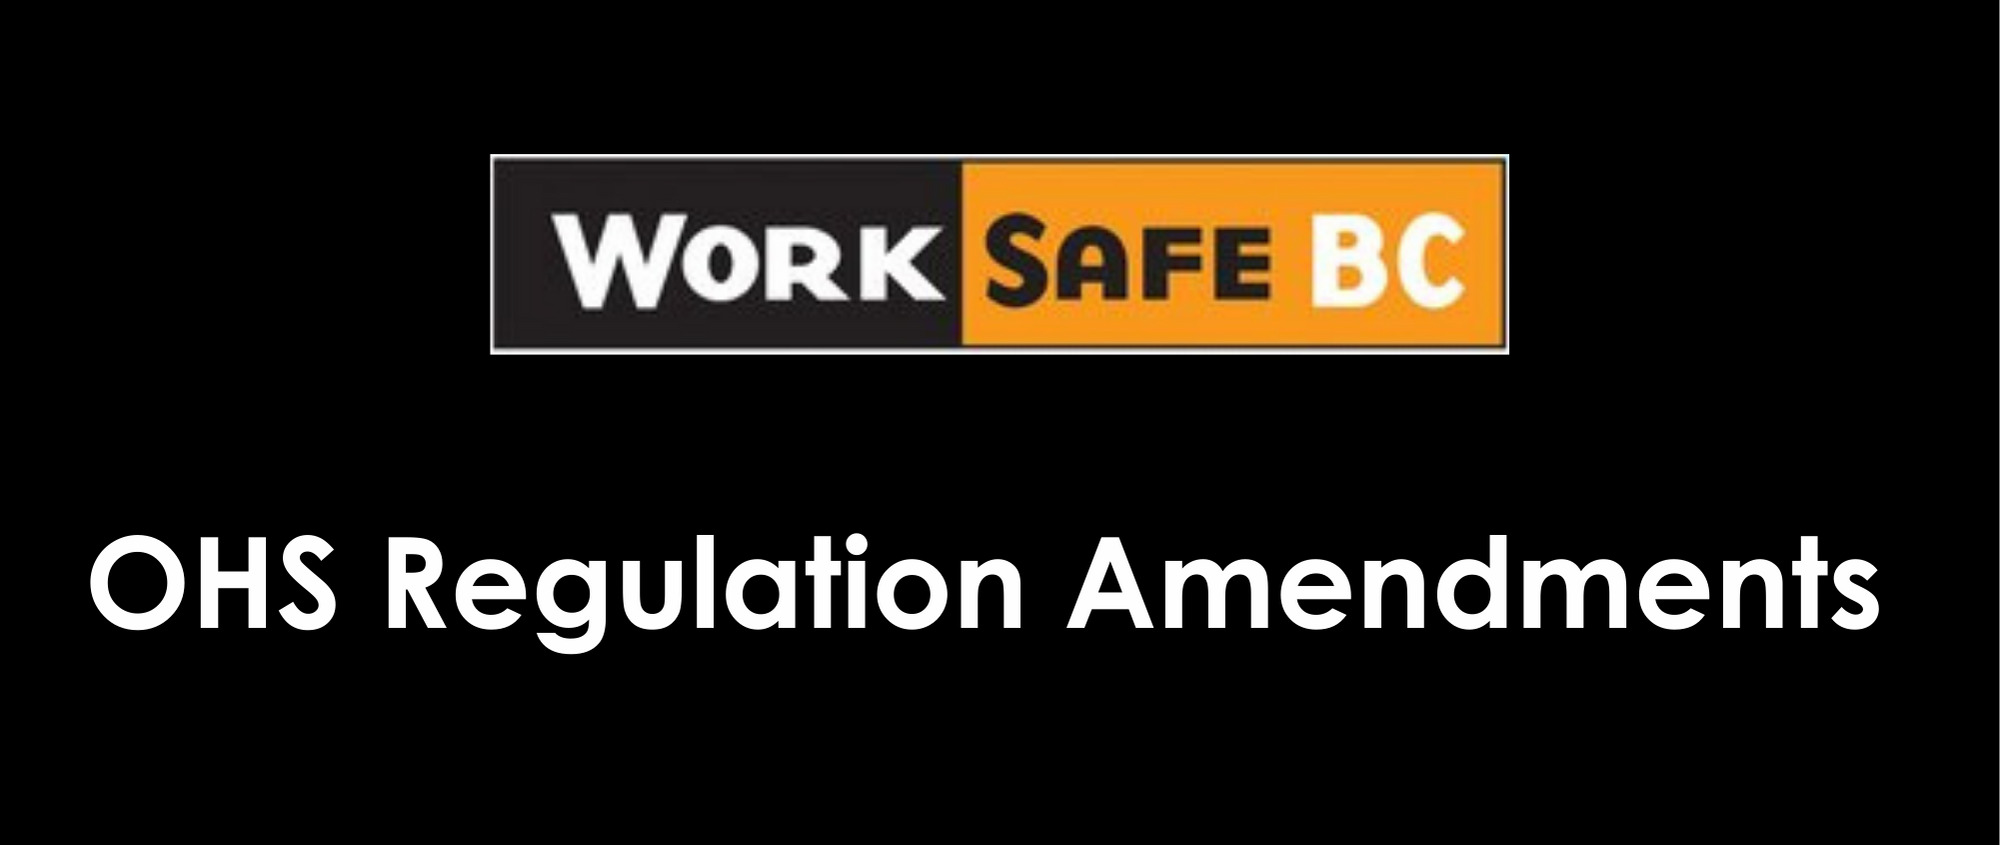 worksafebc_ohs-regulations-amendments